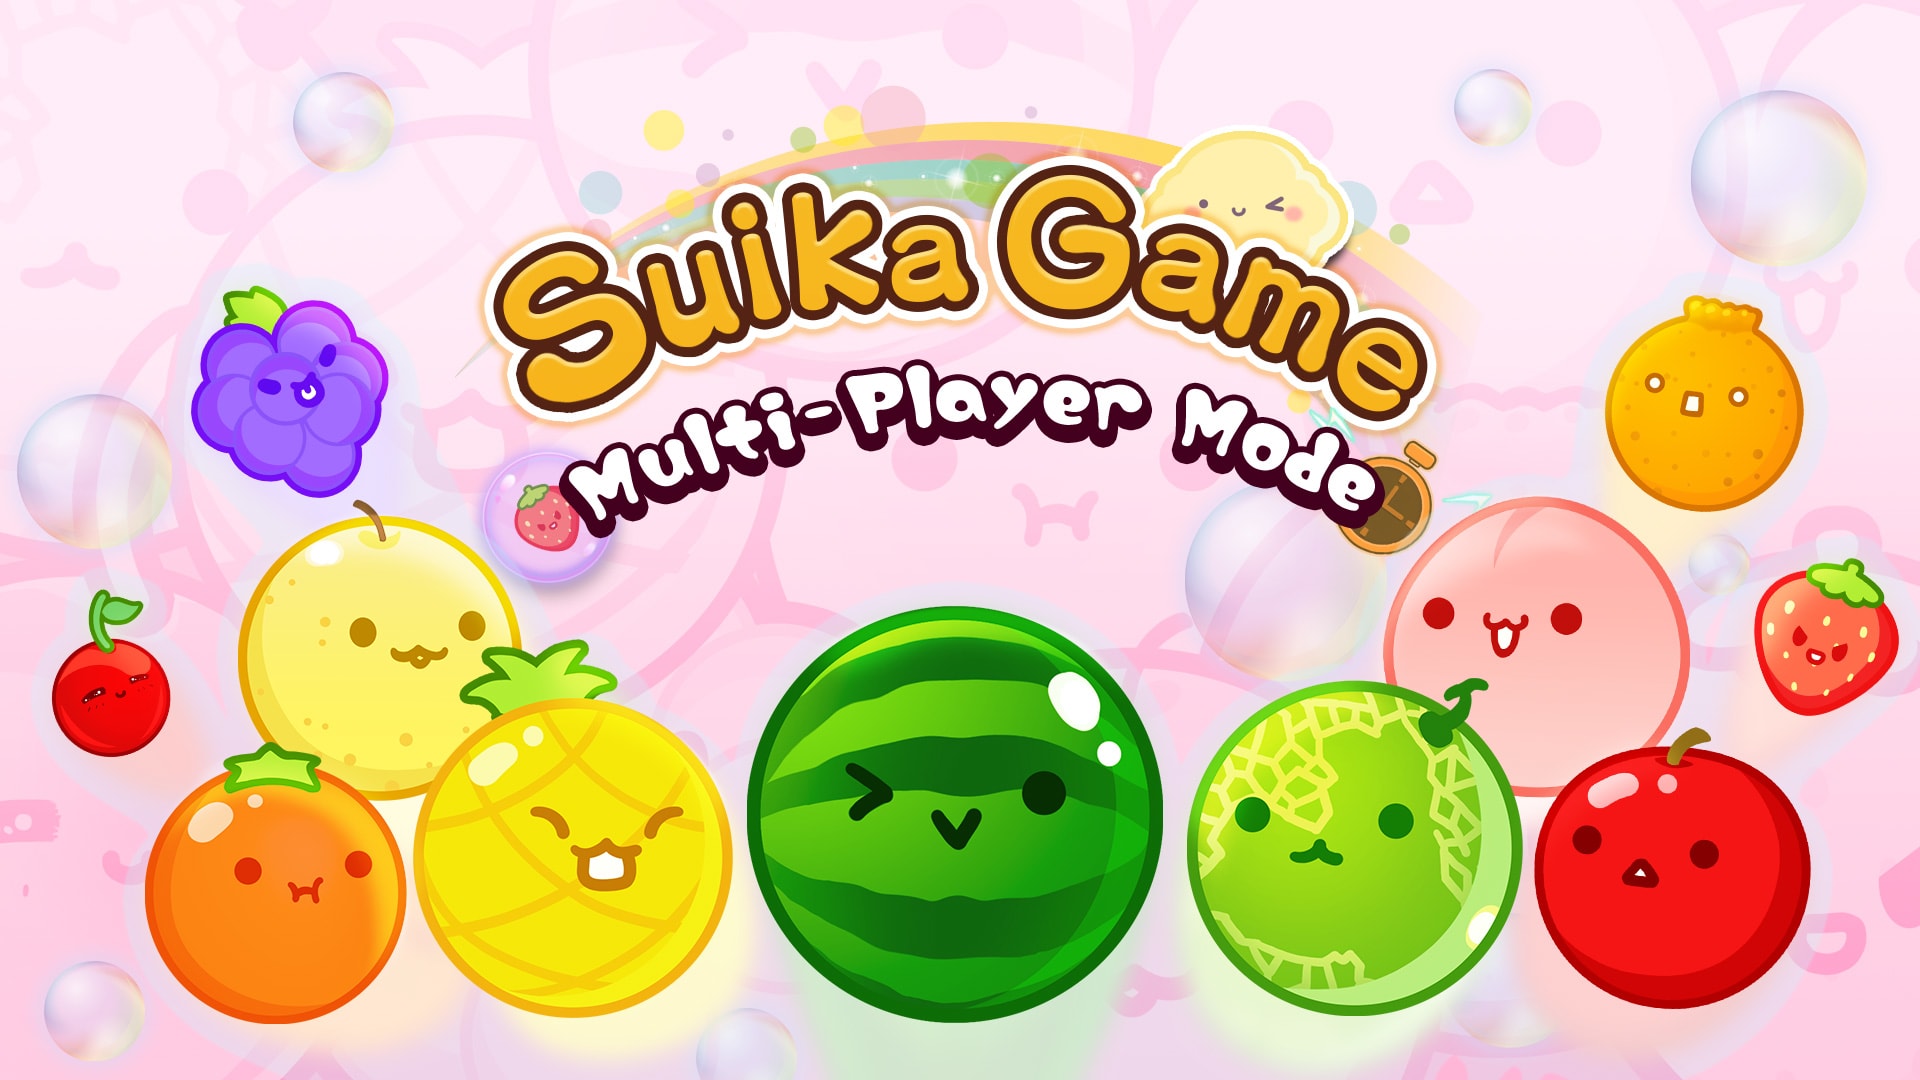 Suika Game Multi-Player Mode Expansion Pack 1